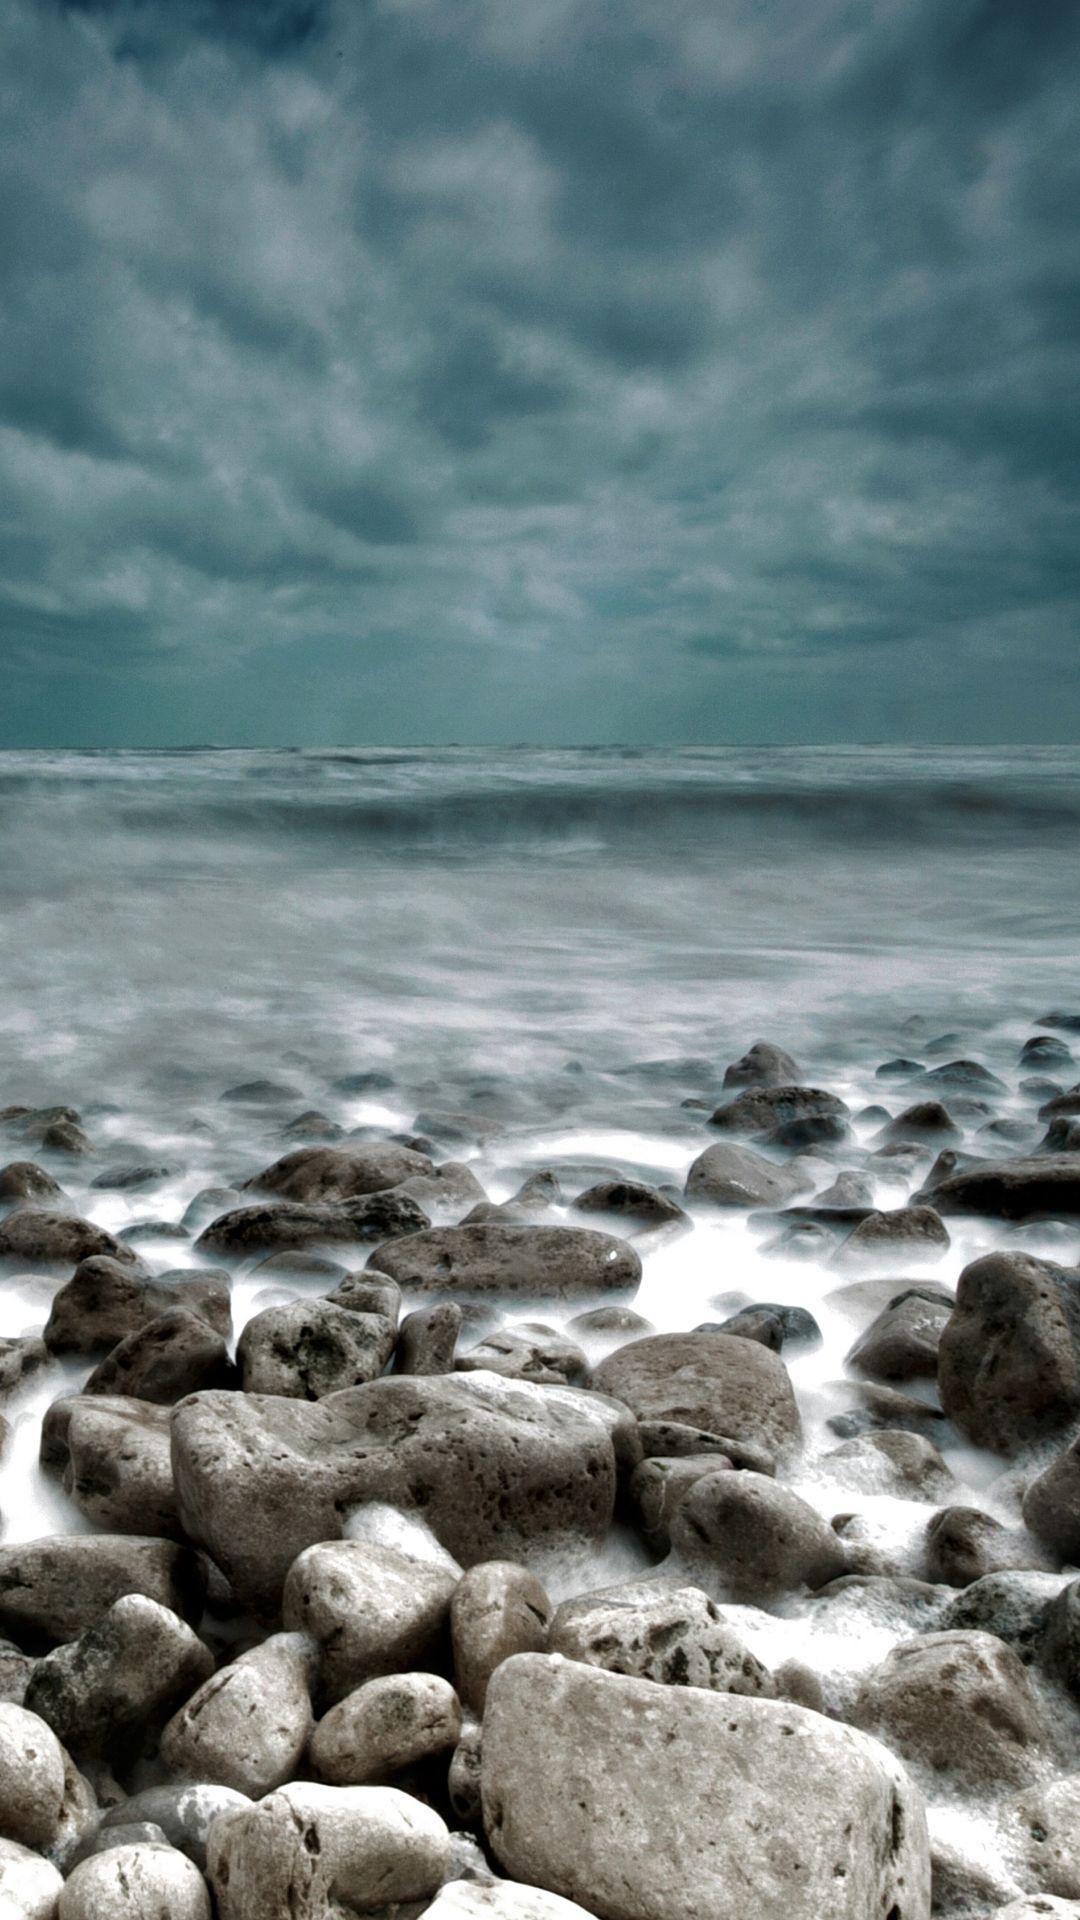 Rough Sea Rocks Waves Lockscreen Android Wallpaper free download